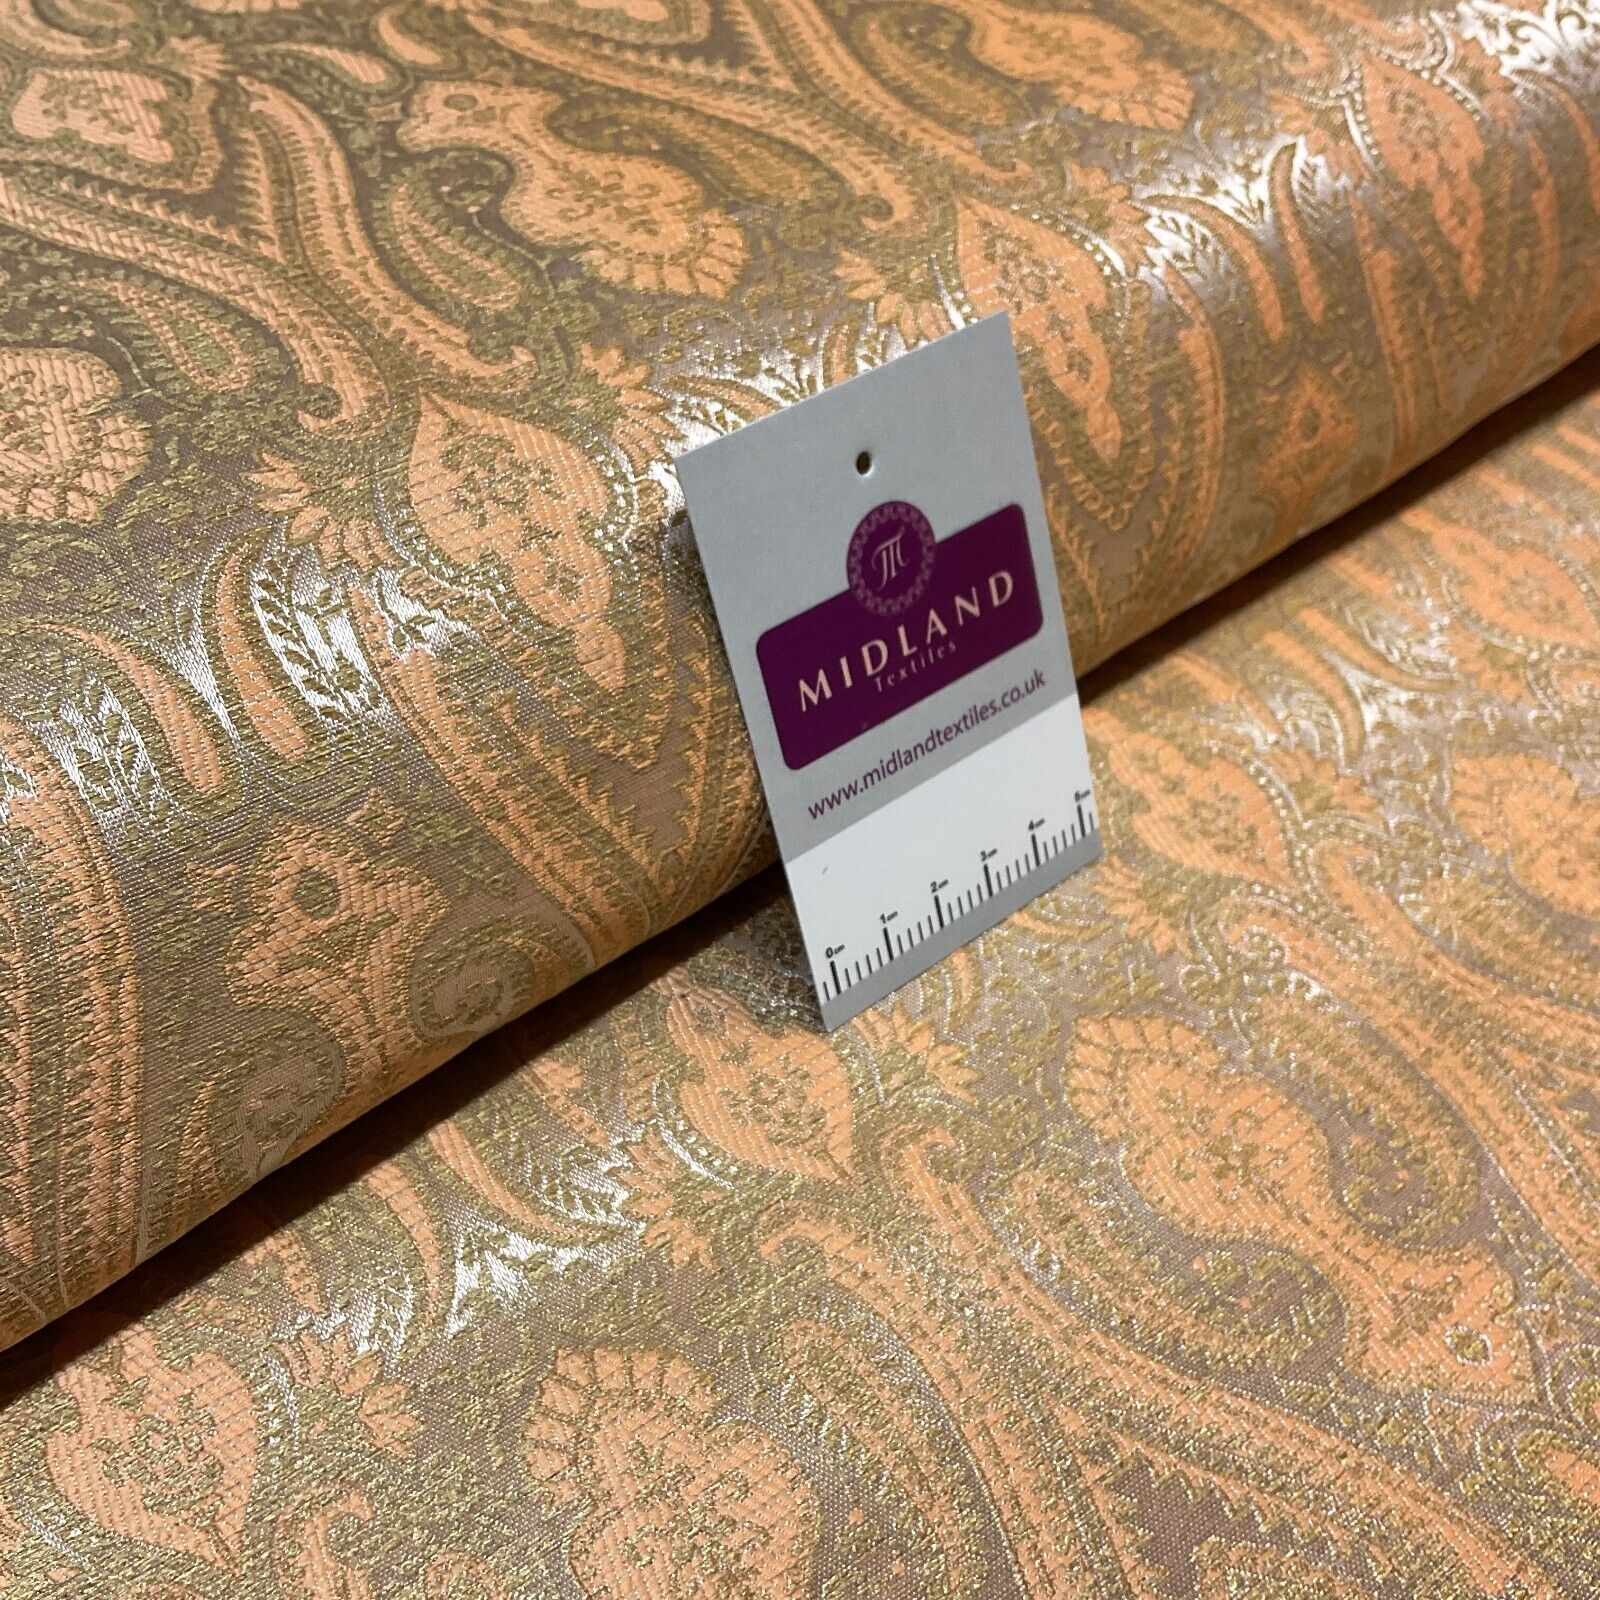 Indian Banarsi Brocade wedding double paisley ornate fabric 150cm wide M1728